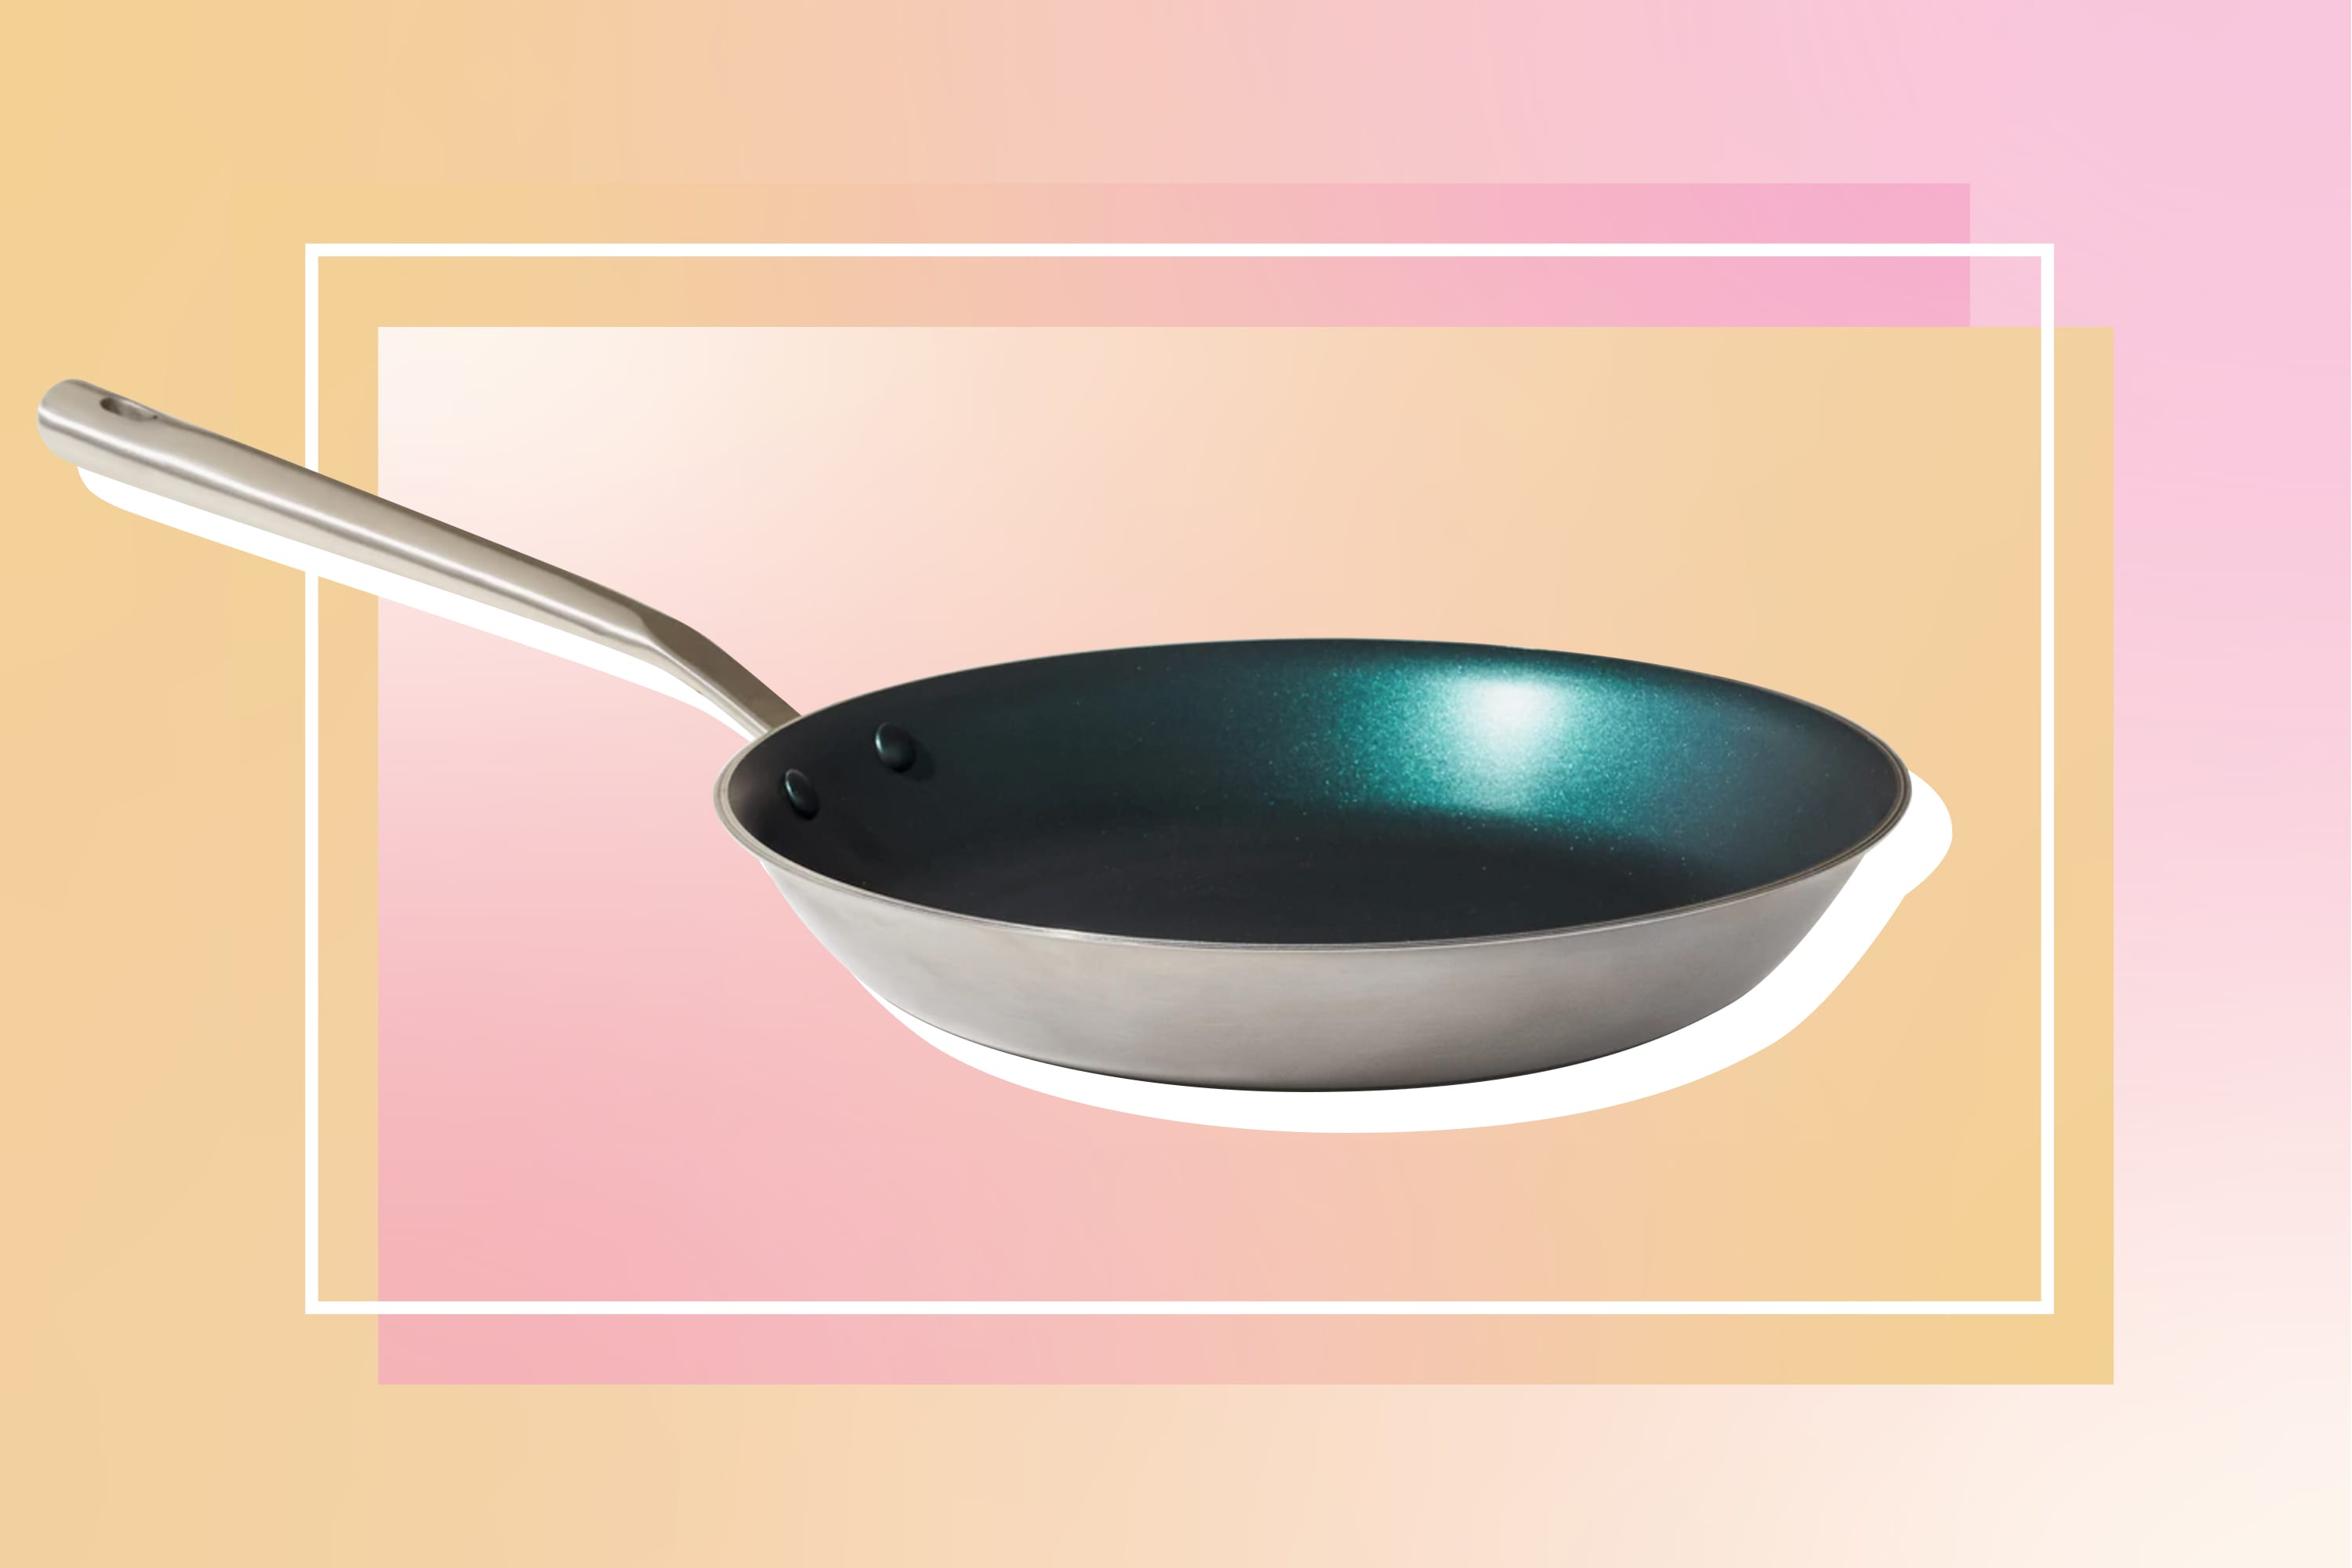 Nonstick Cookware Brands: PTFE (Teflon®) or Ceramic? A